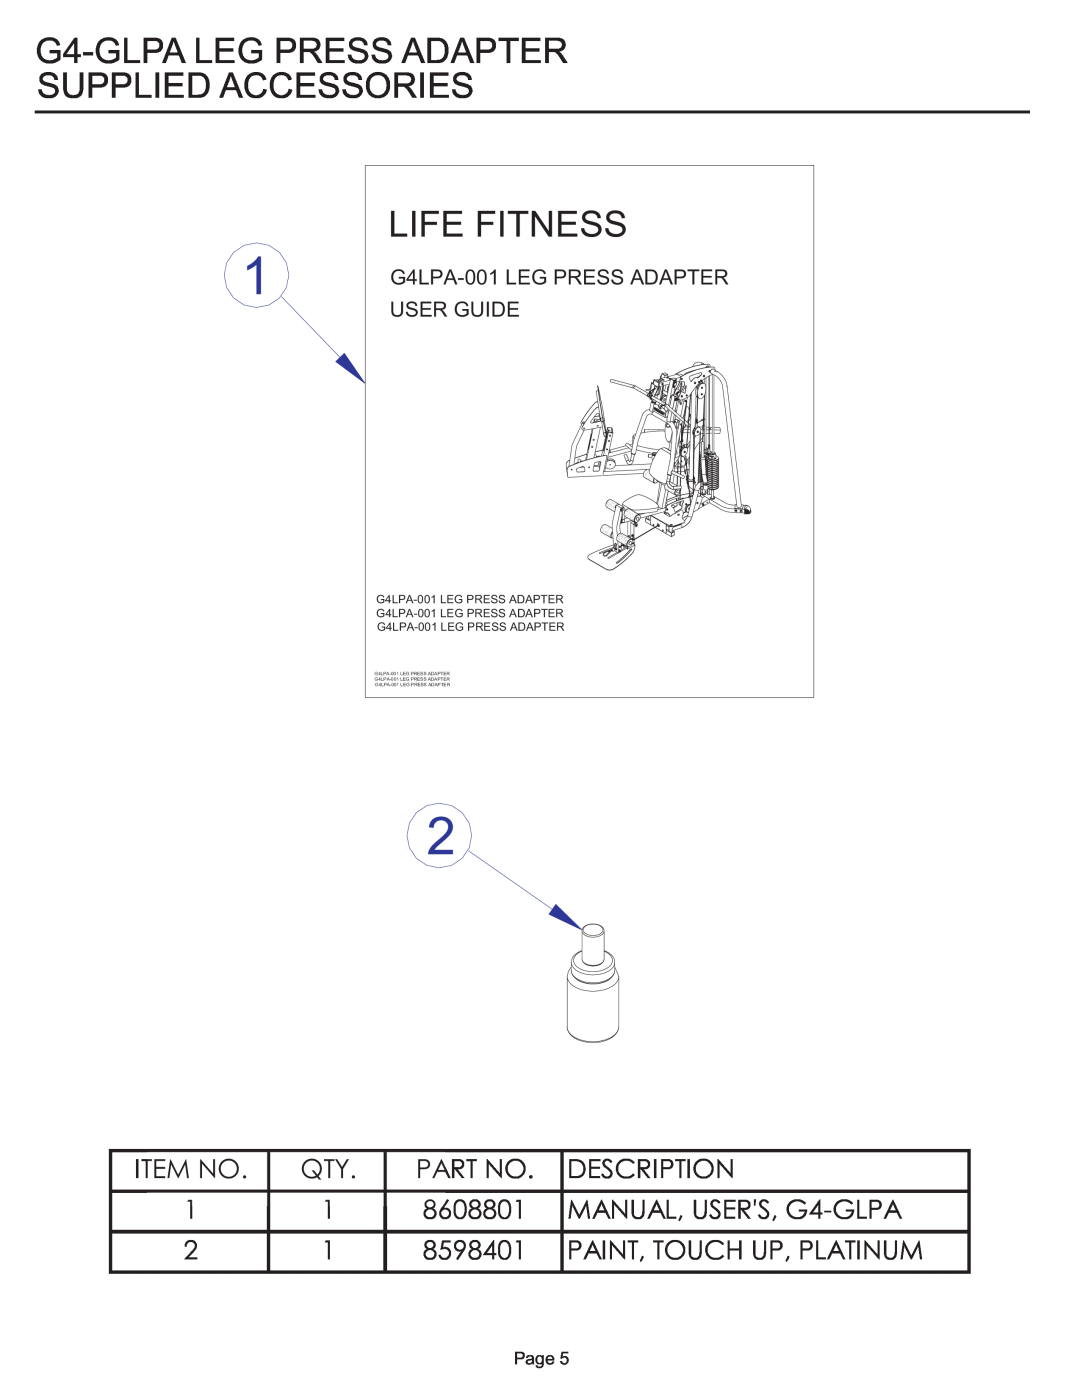 Life Fitness G4-GLPA-001 G4-GLPA LEG PRESS ADAPTER SUPPLIED ACCESSORIES, Life Fitness, Item No, Description, 8608801, Page 